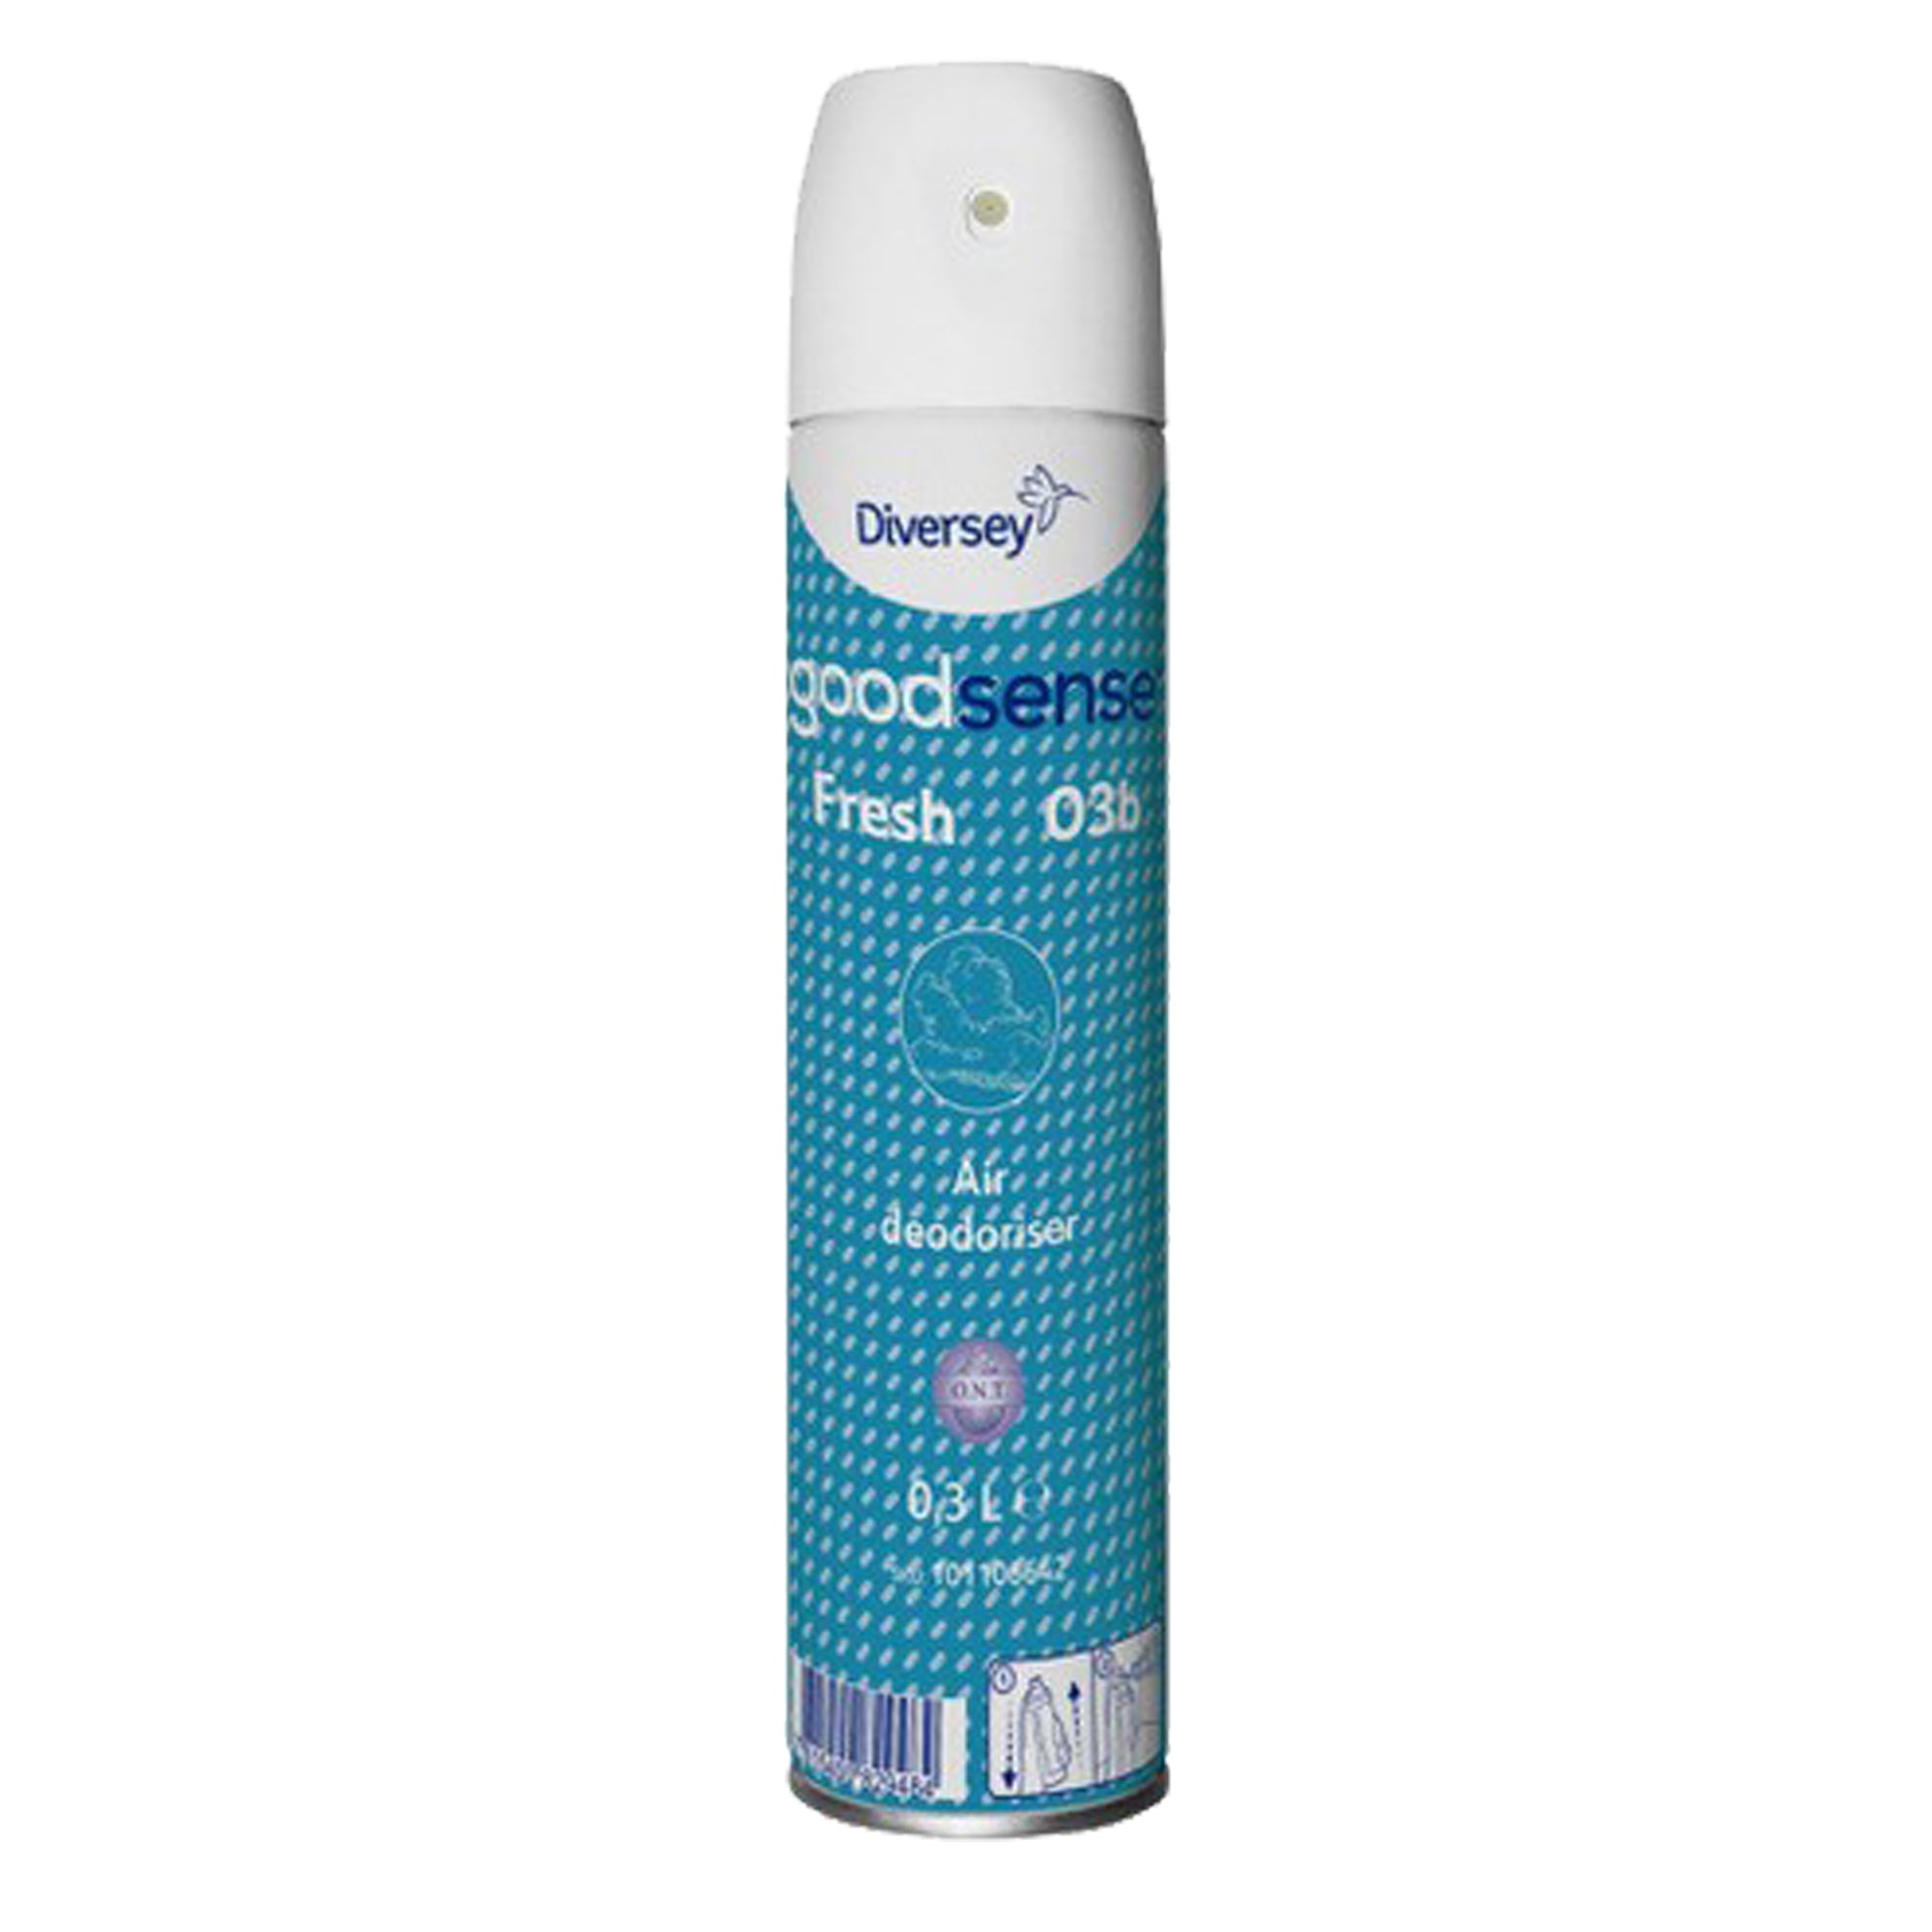 goodsense-deodorante-spray-ambienti-good-sense-fresh-300ml